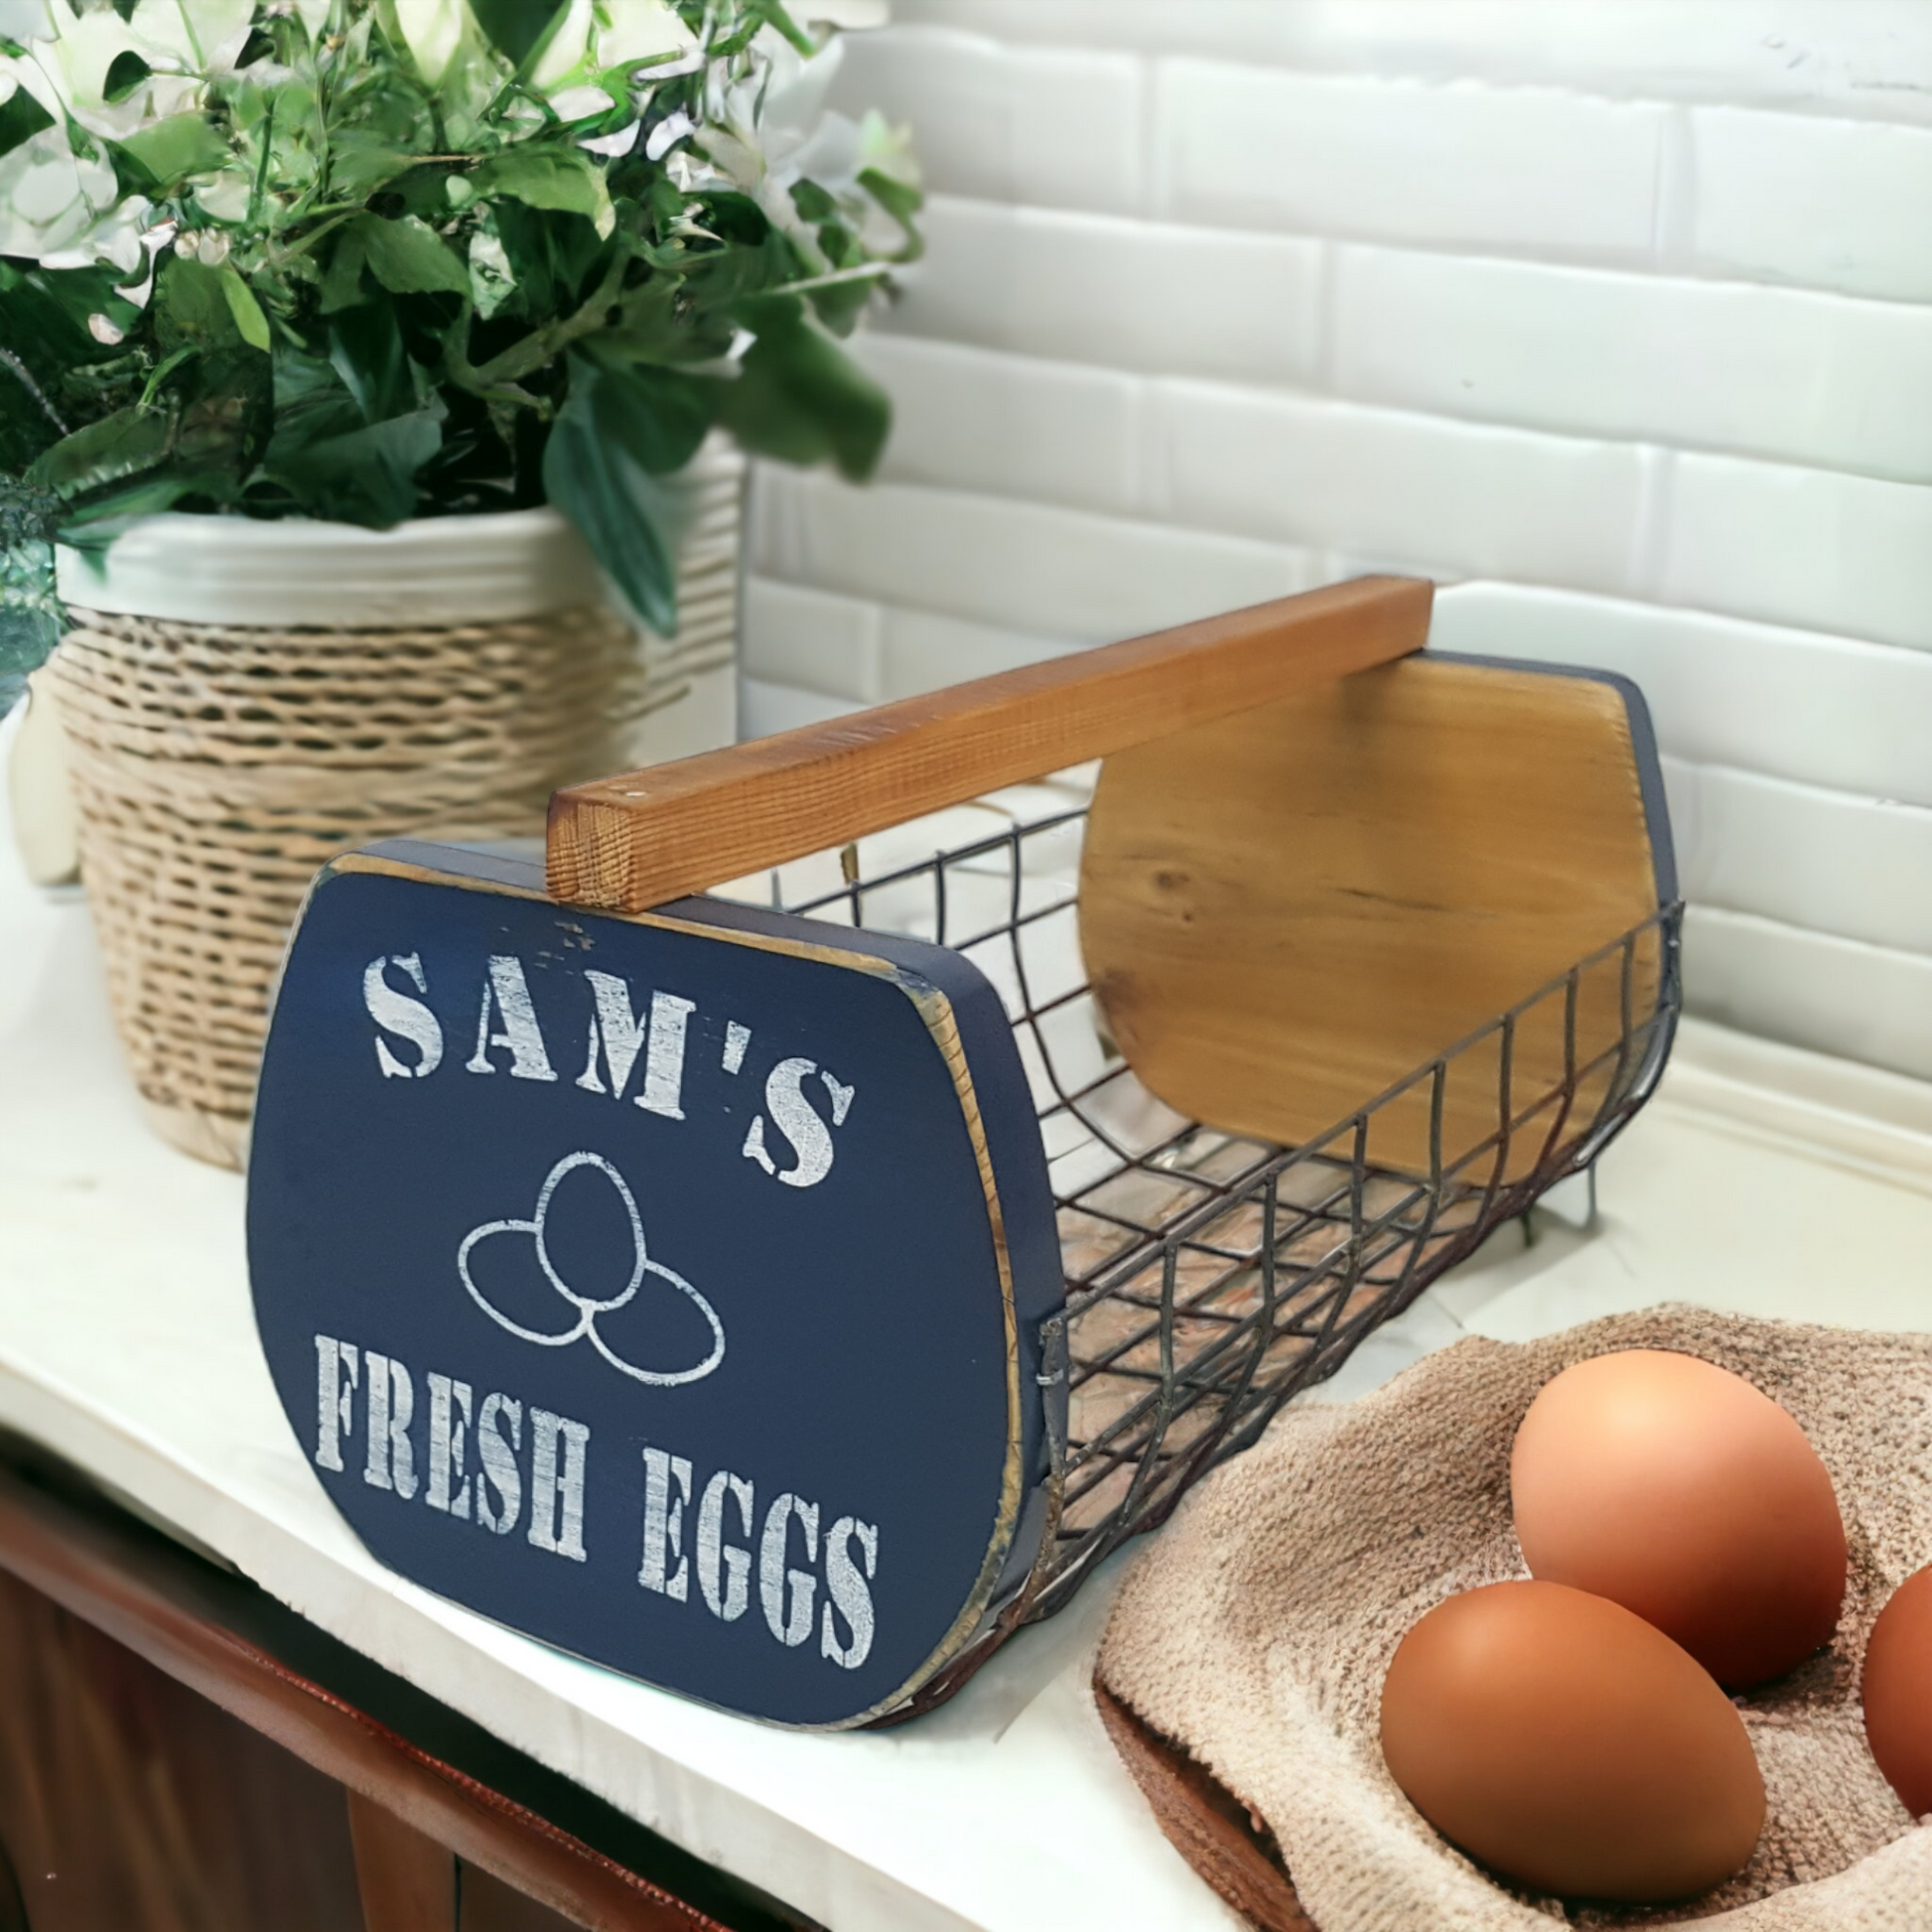 Vintage Primitive Wire Hand Made Chicken Egg Basket Farmhouse